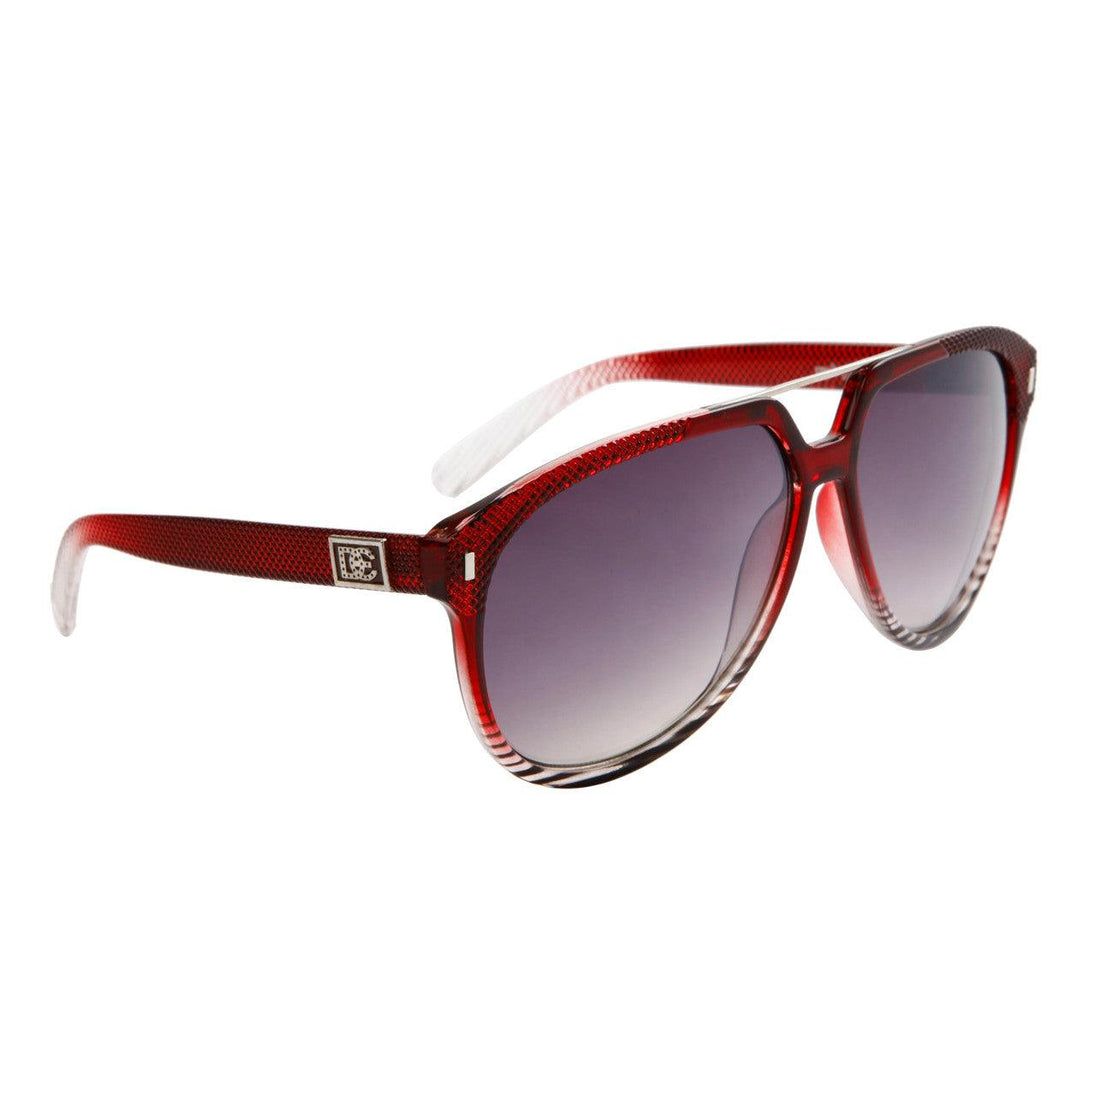 Nice aviator Sunglasses by DE - PremiumBrandGoods